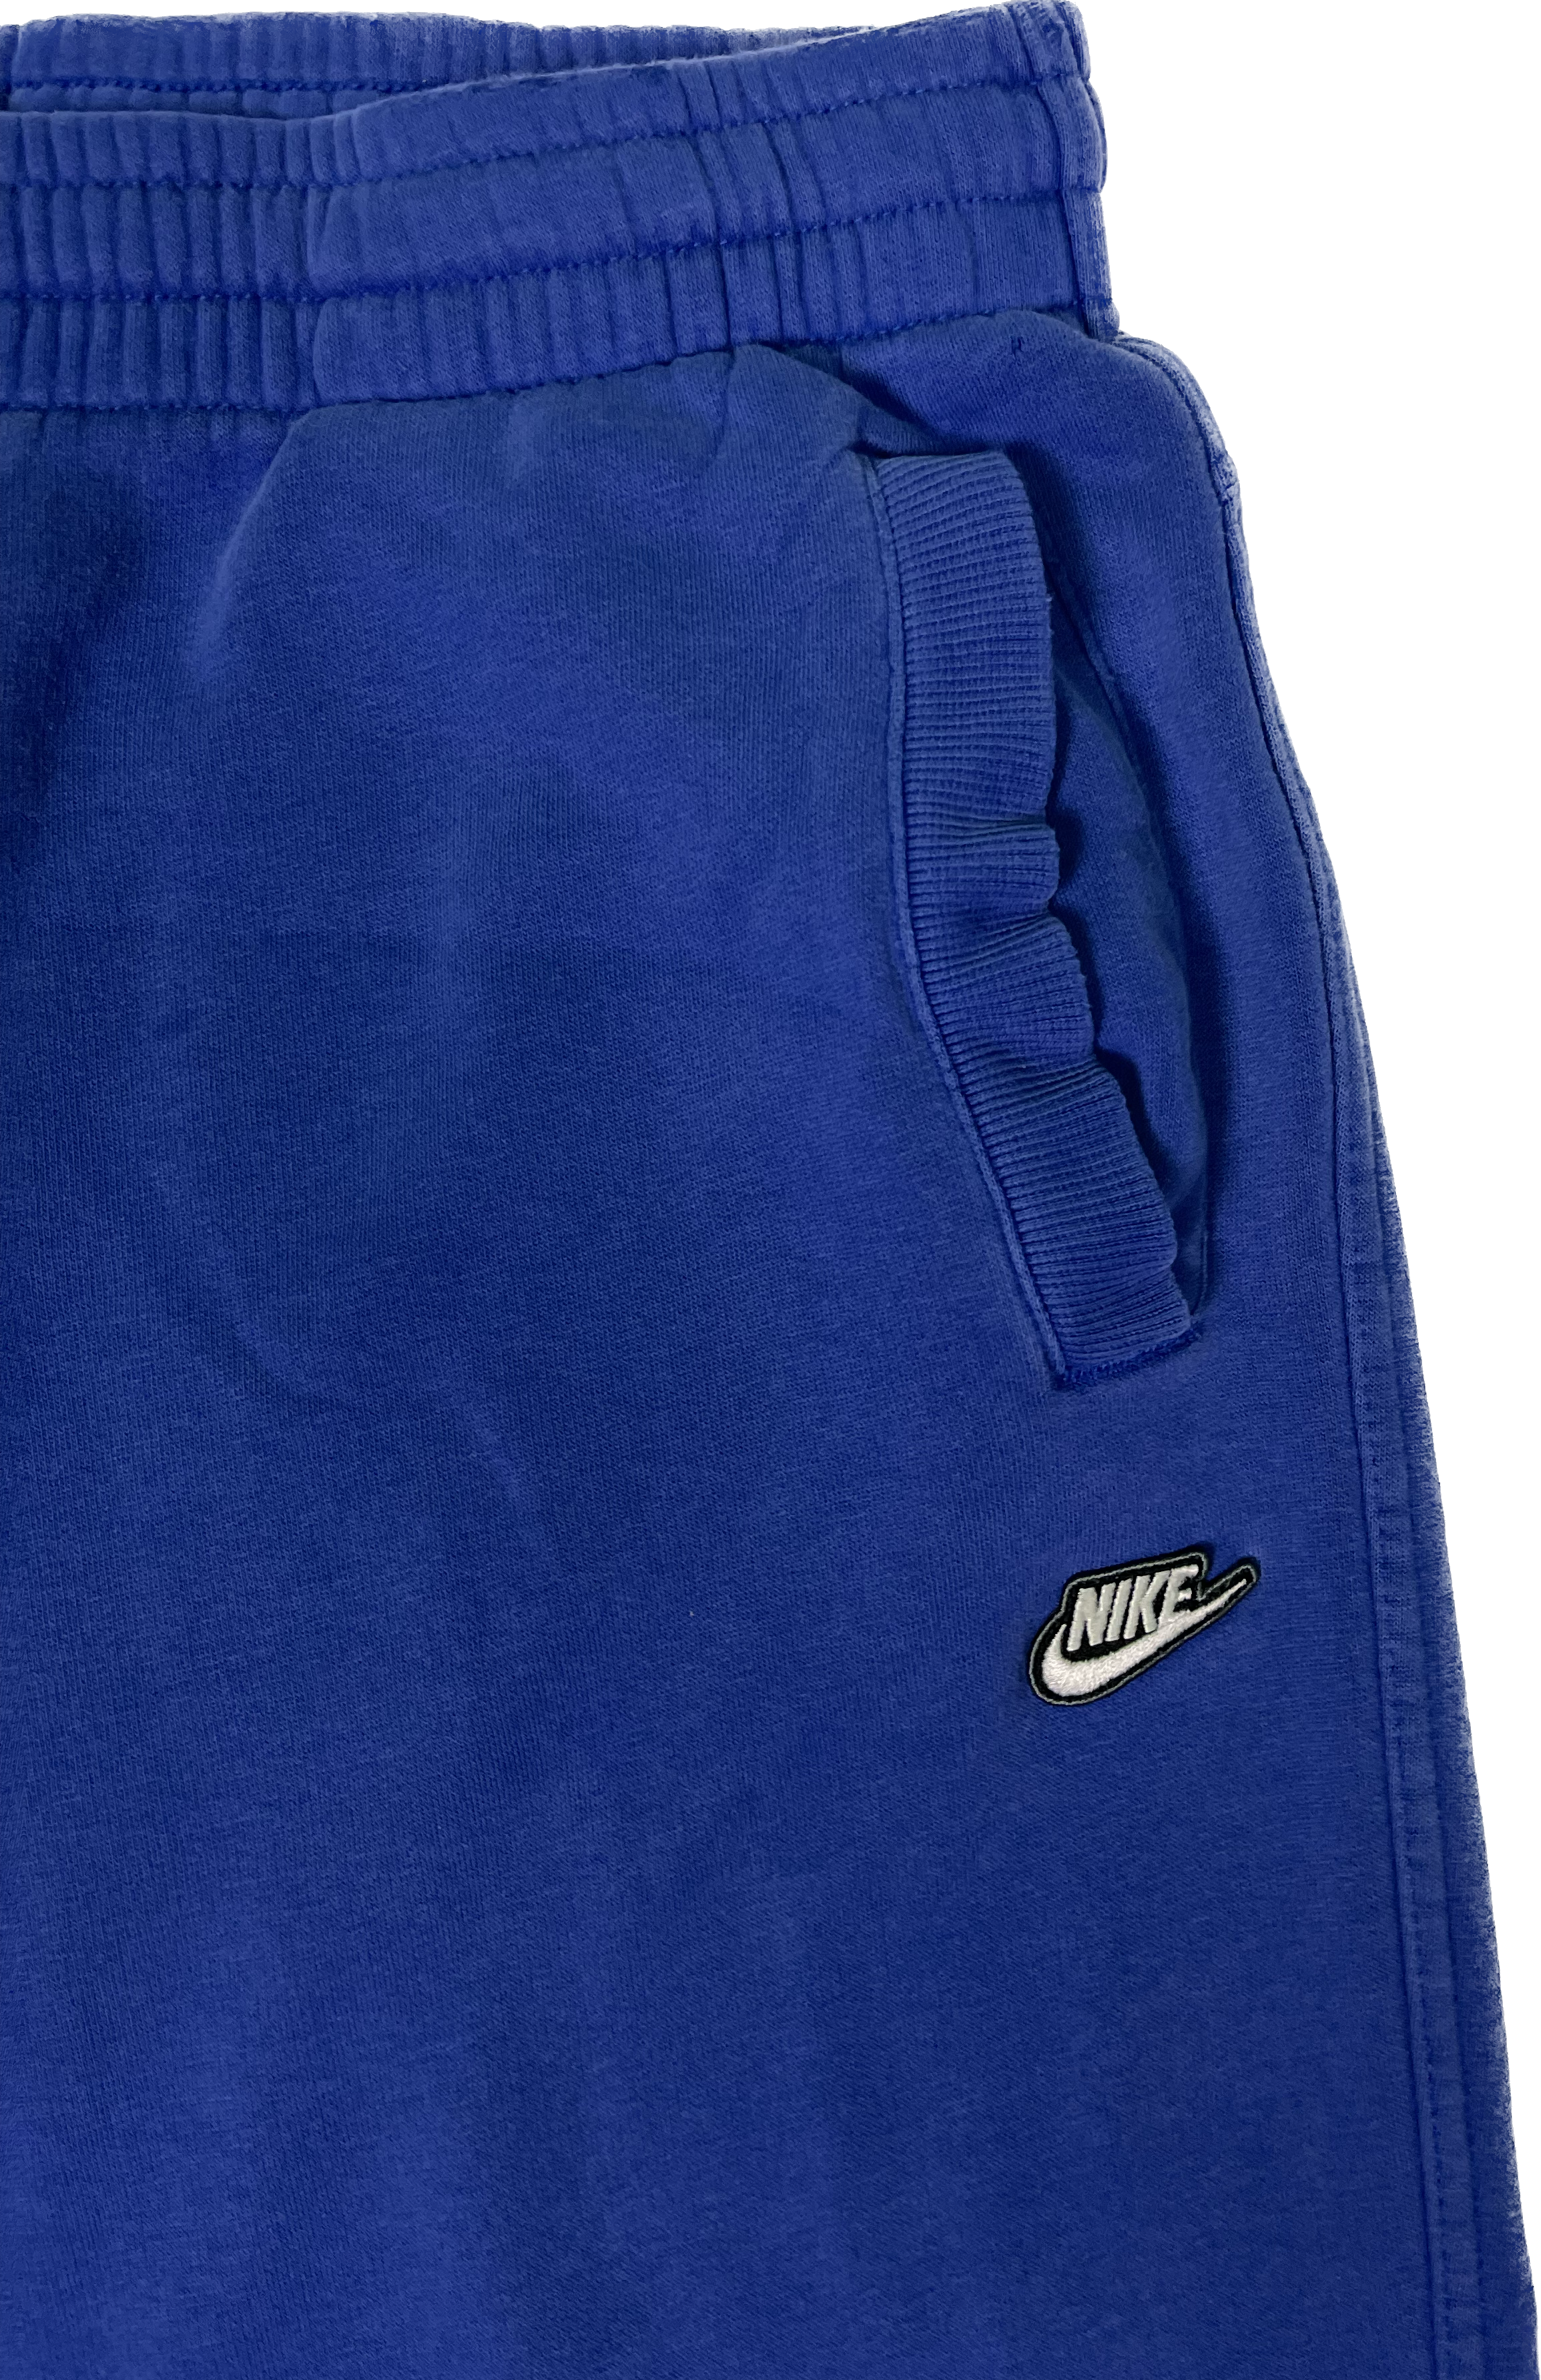 Nike Vintage Sweatpants